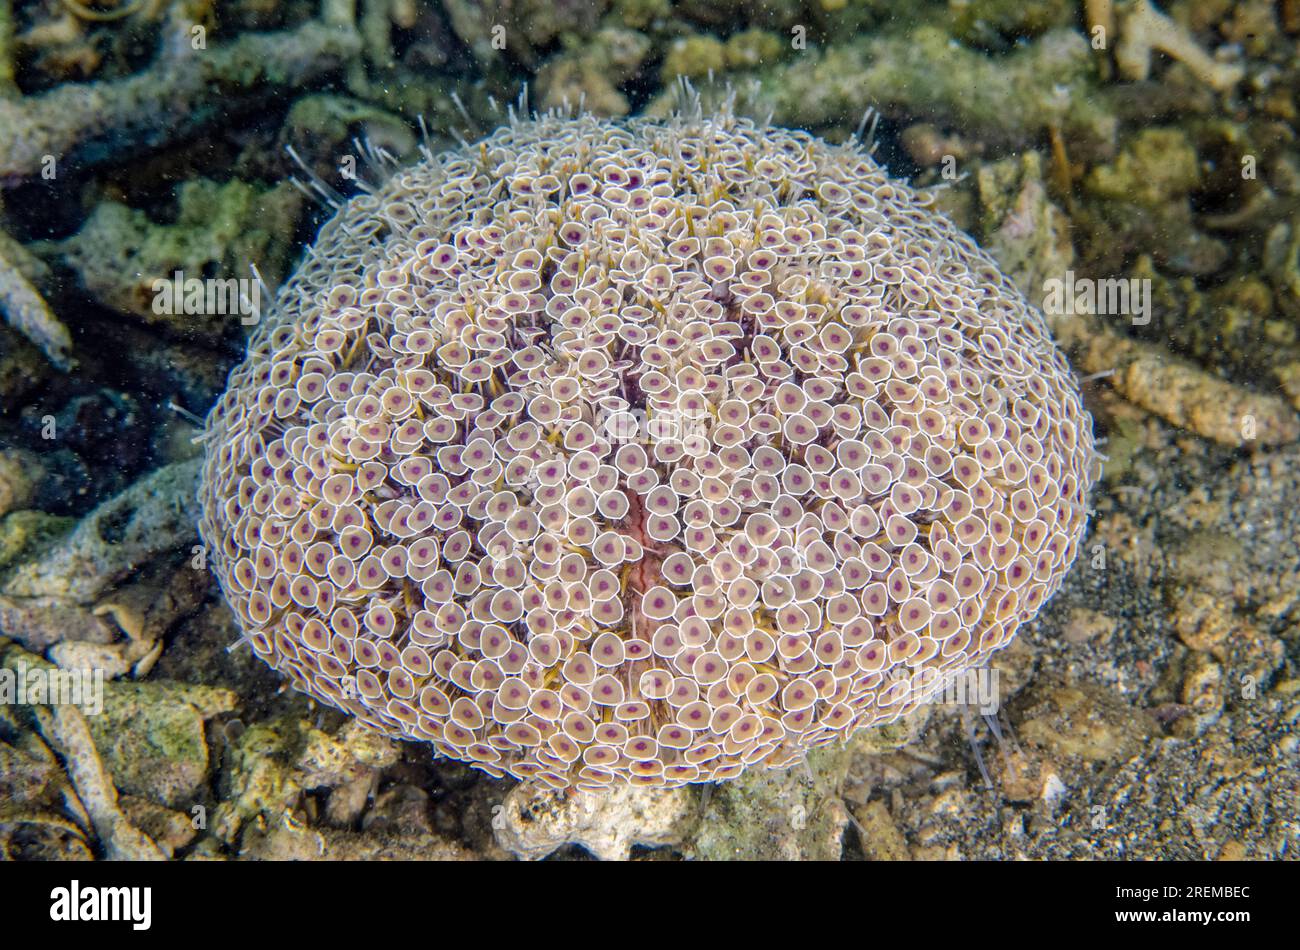 Flower Urchin, Toxopneustes pileolus, extremely toxic, Secret Bay dive site, Gilimanuk, Jembrana Regency, Bali, Indonesia Stock Photo